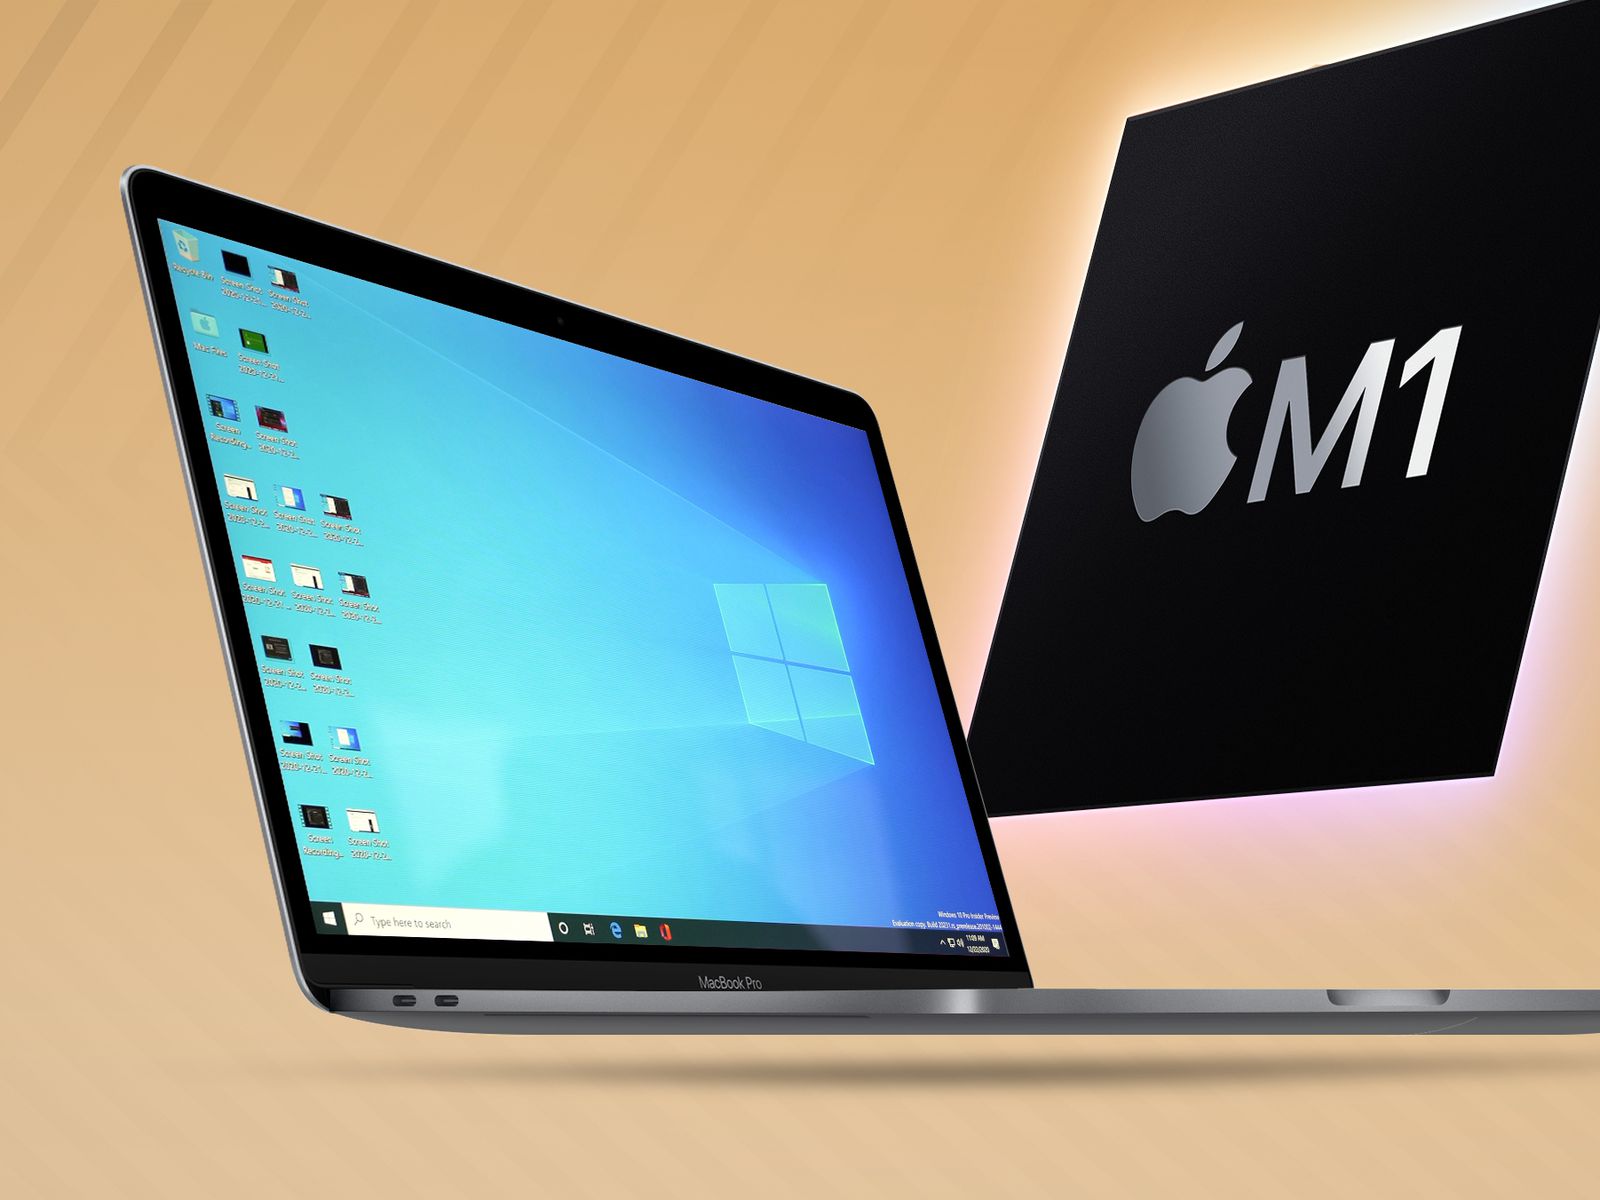 parallels desktop mac m1